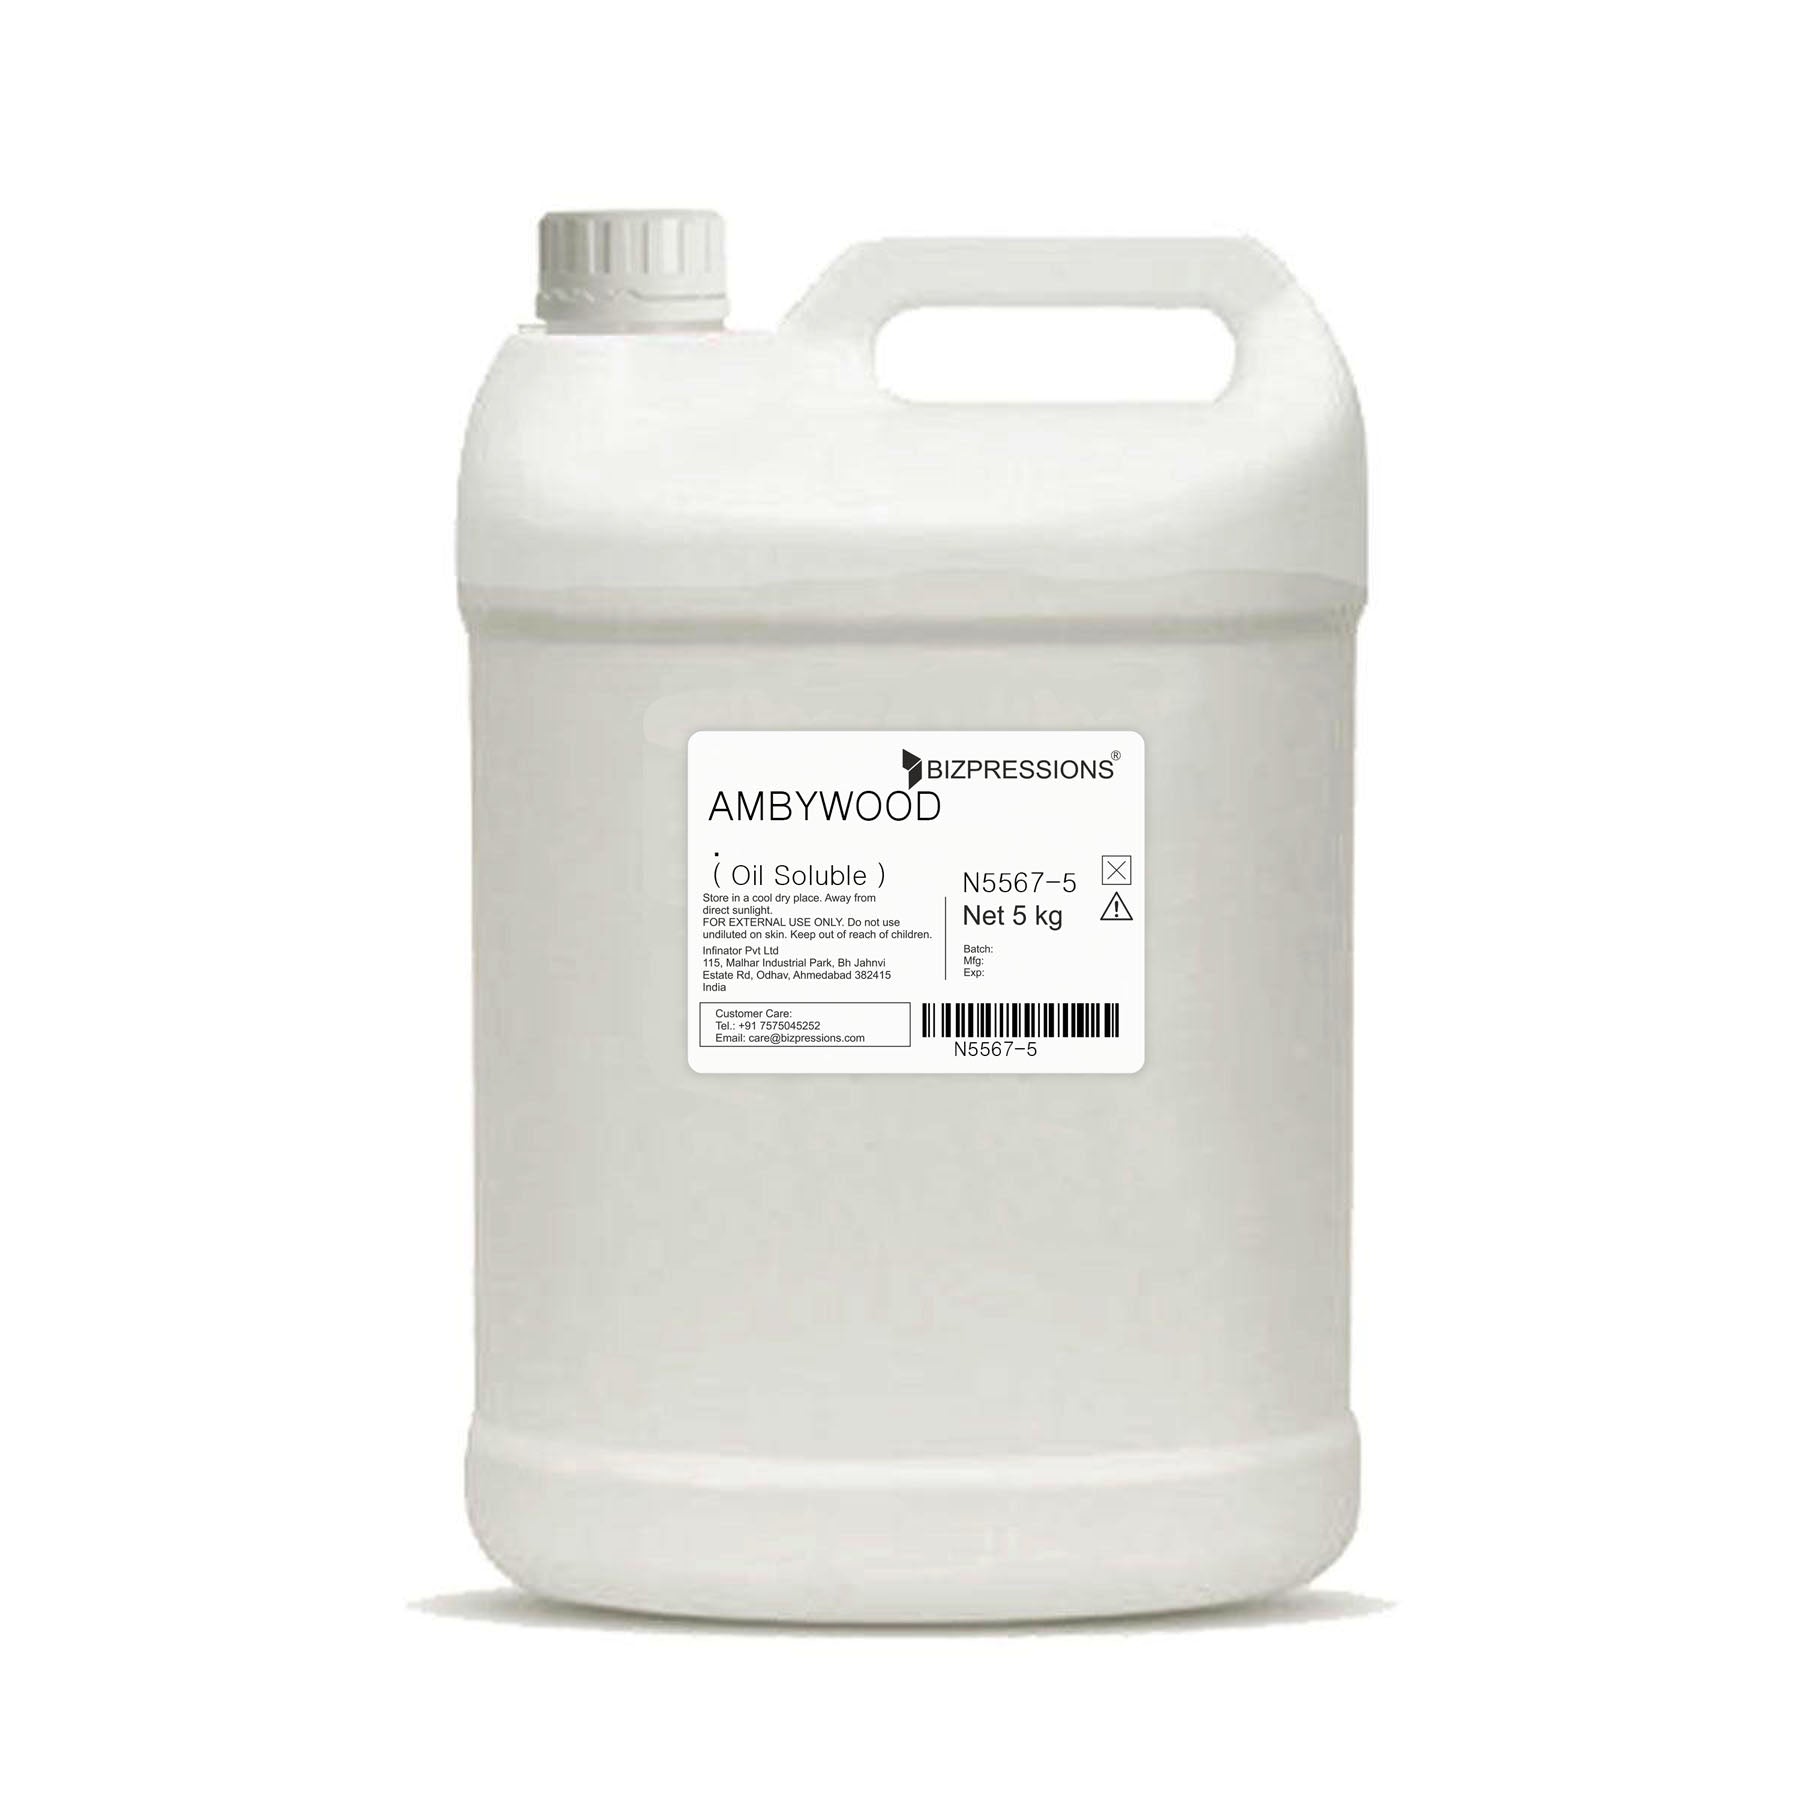 AMBYWOOD - Fragrance ( Oil Soluble ) - 5 kg